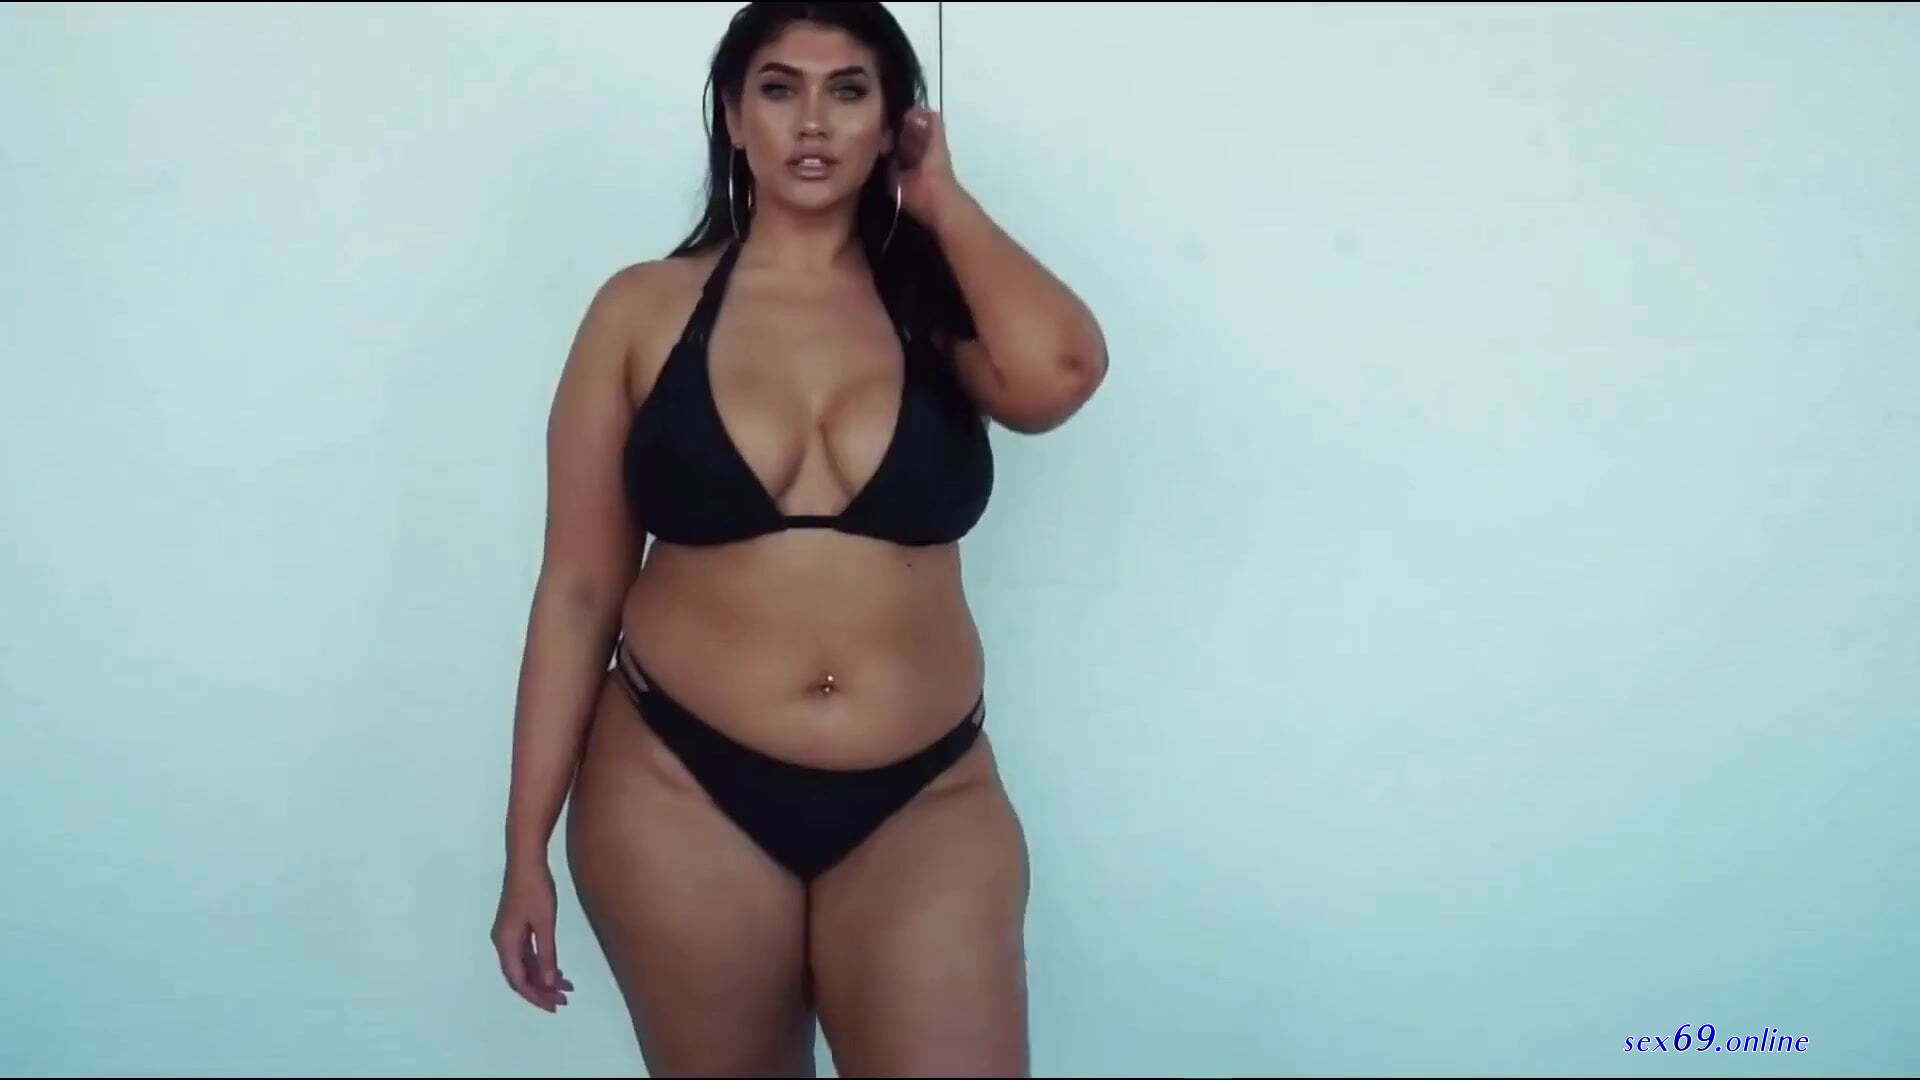 Plus Size Modal Sex Video - plus size model xnxx - Sexy photos